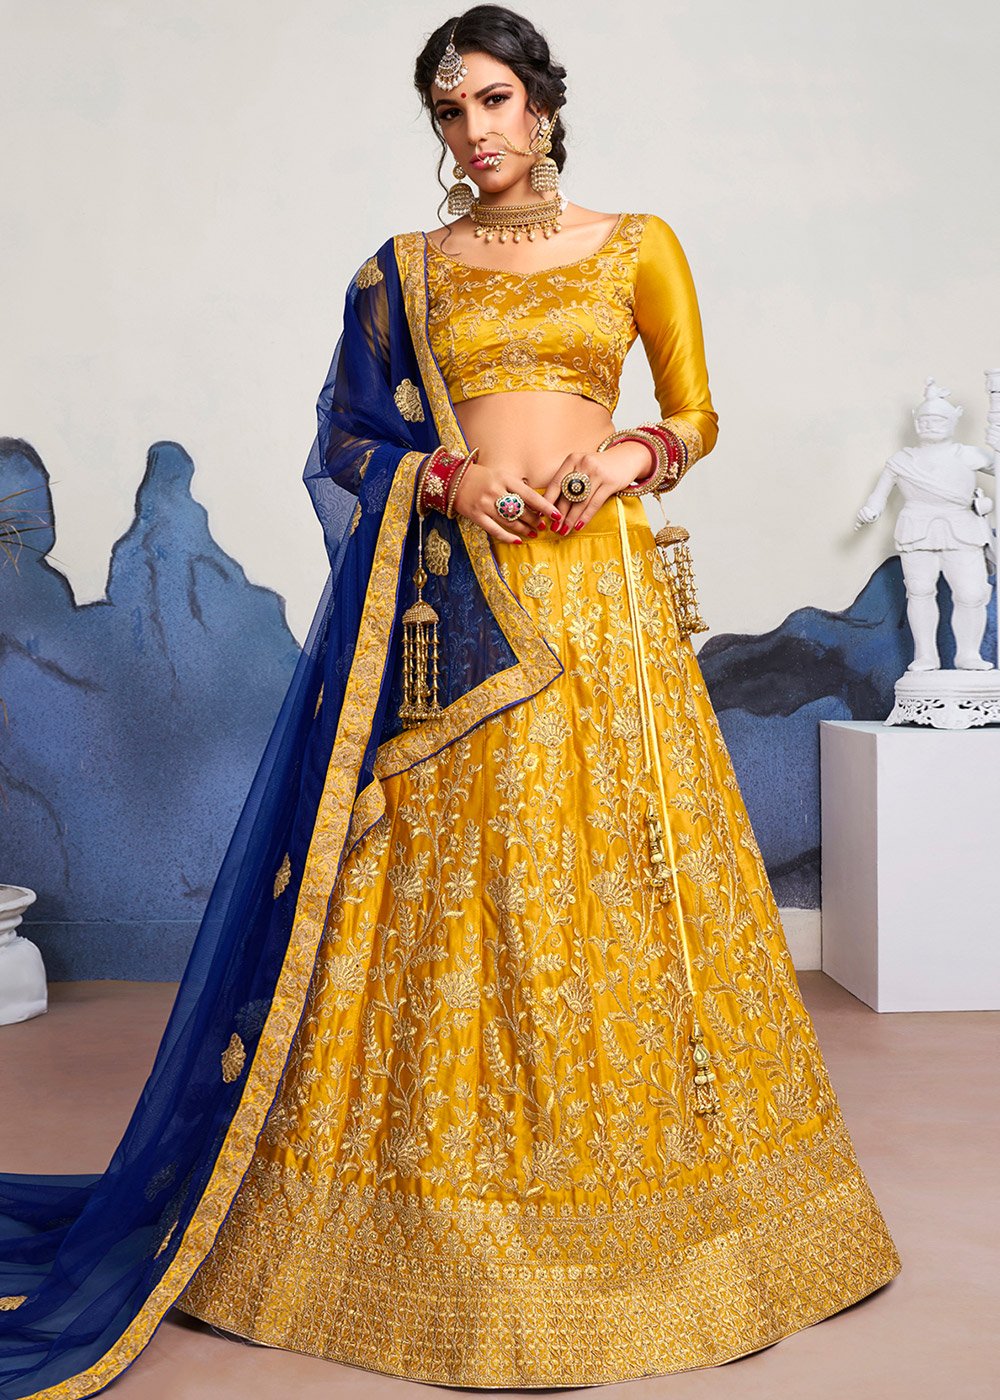 Buy Royal blue and yellow Indian silk wedding lehenga in UK, USA and Canada